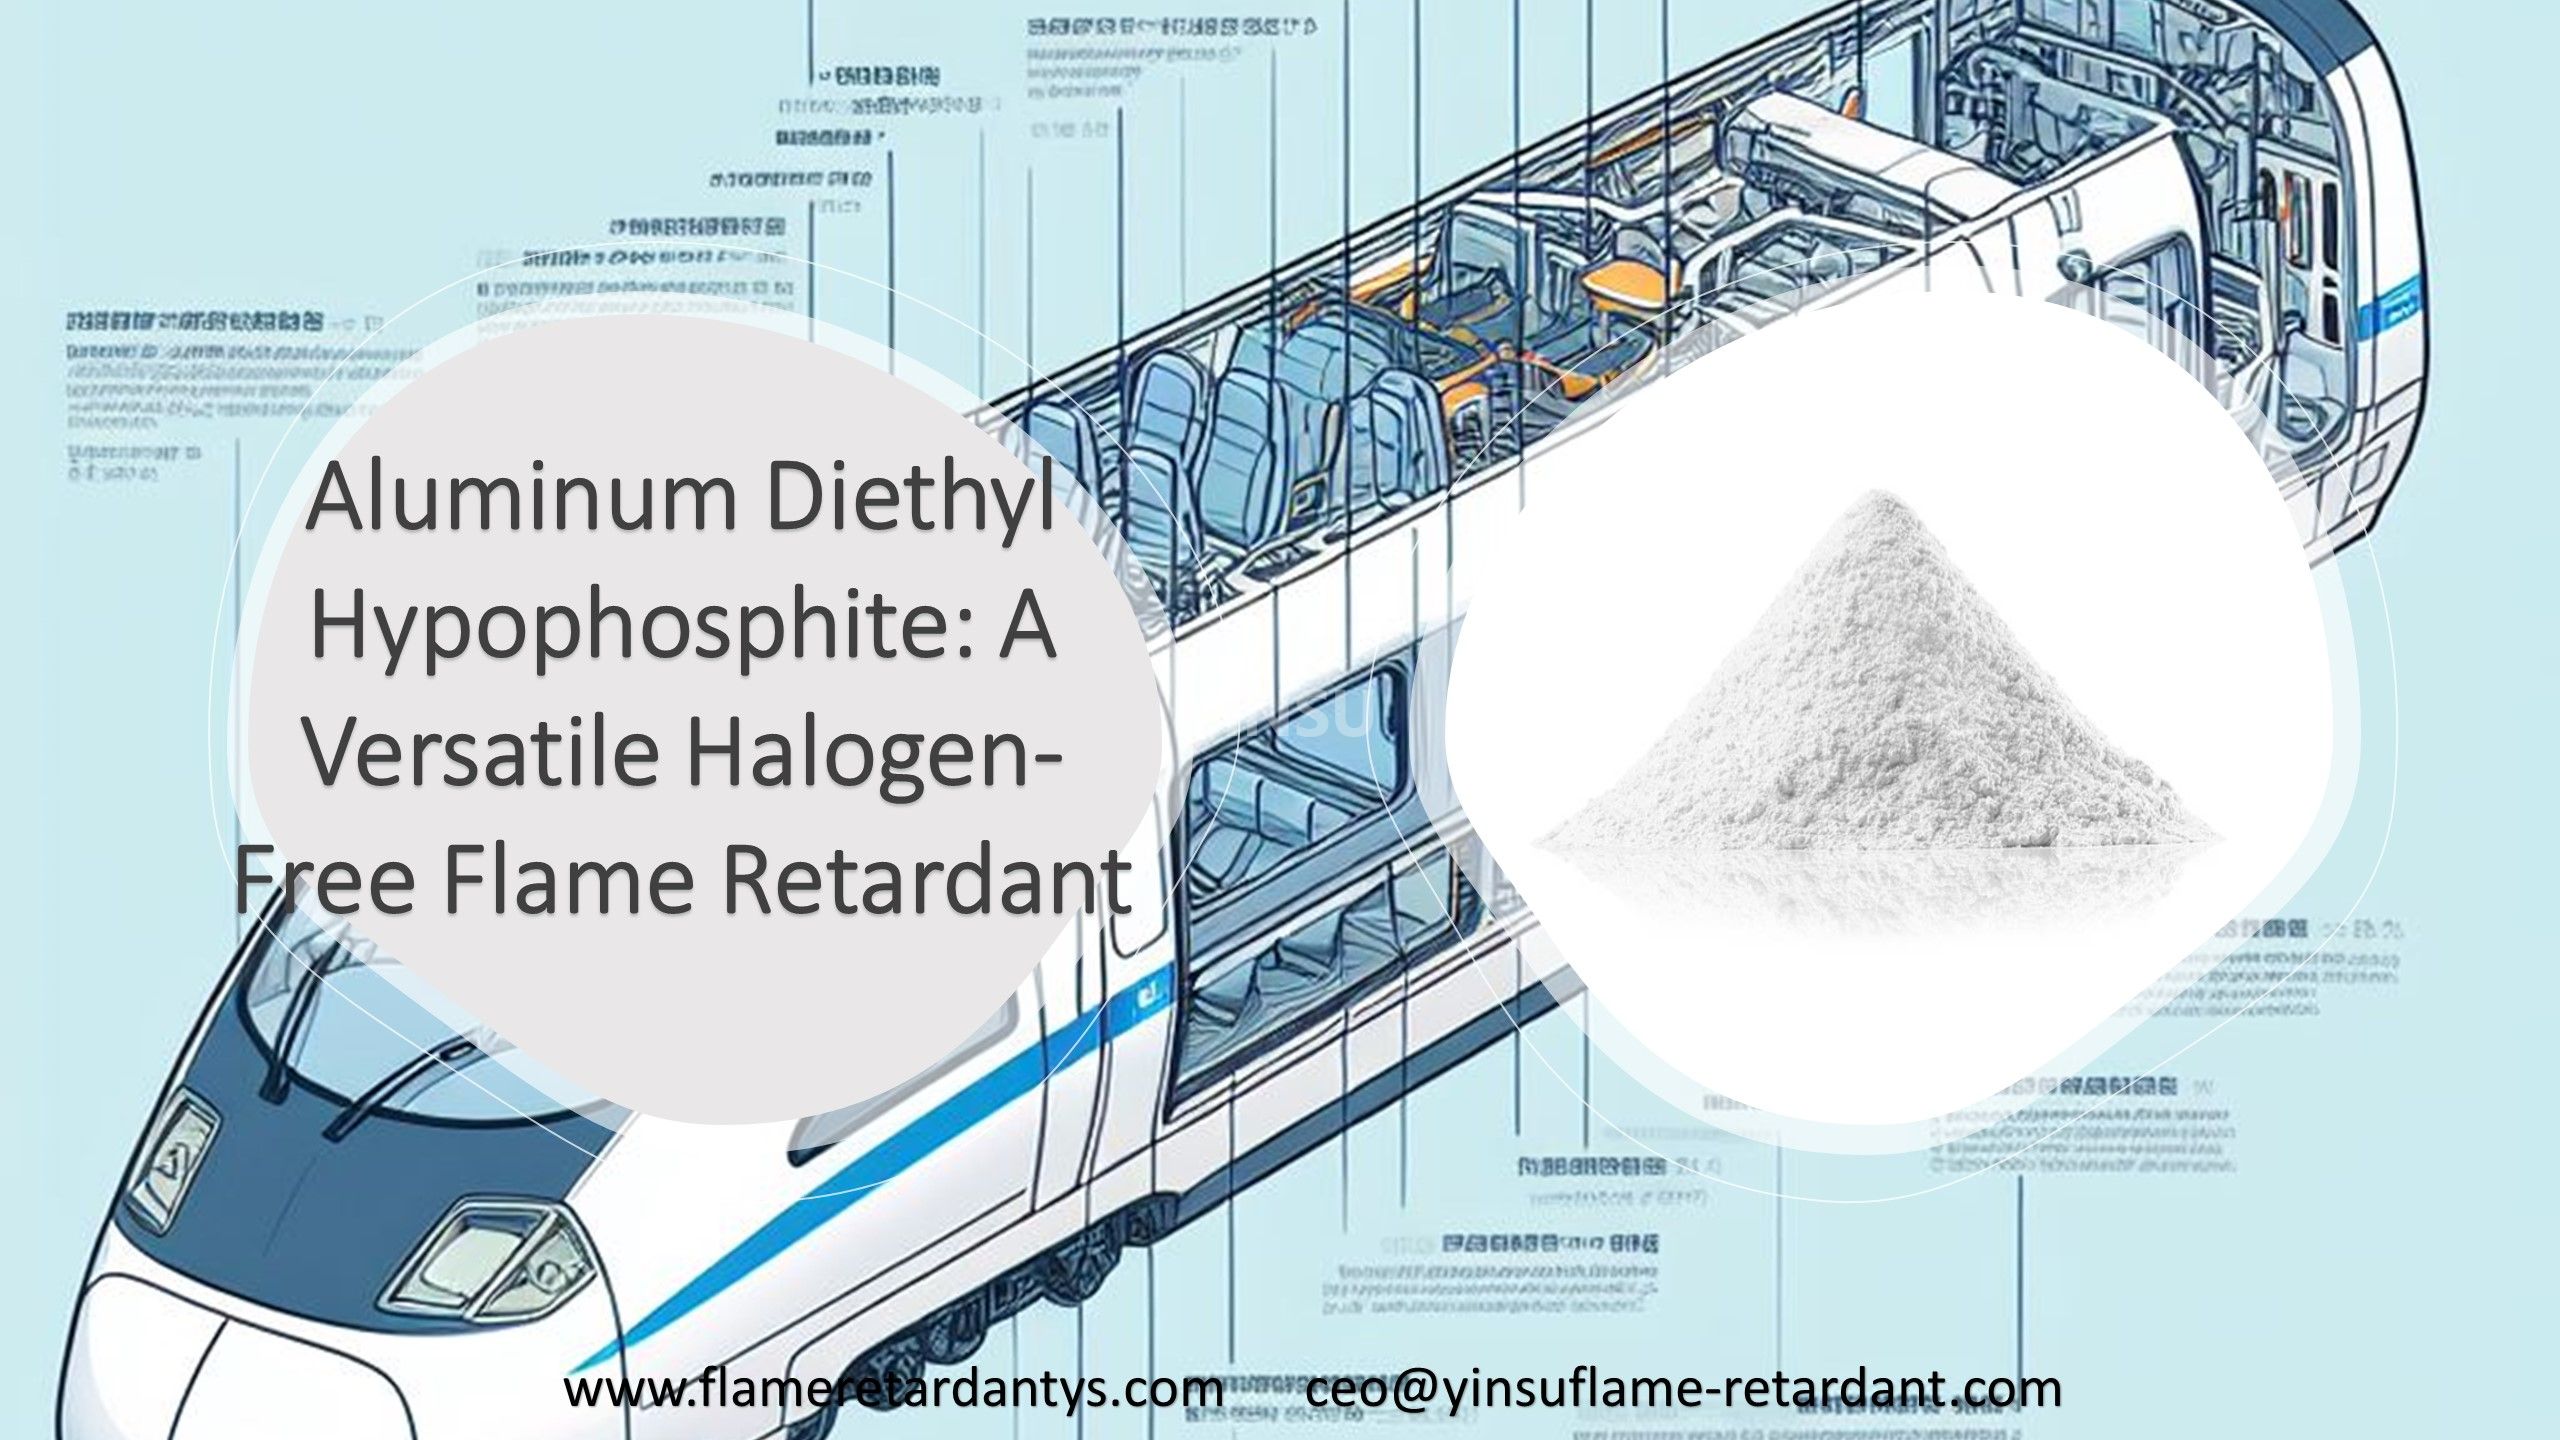 Discover Aluminum Diethyl Hypophosphite: A Versatile Halogen-Free Flame Retardant